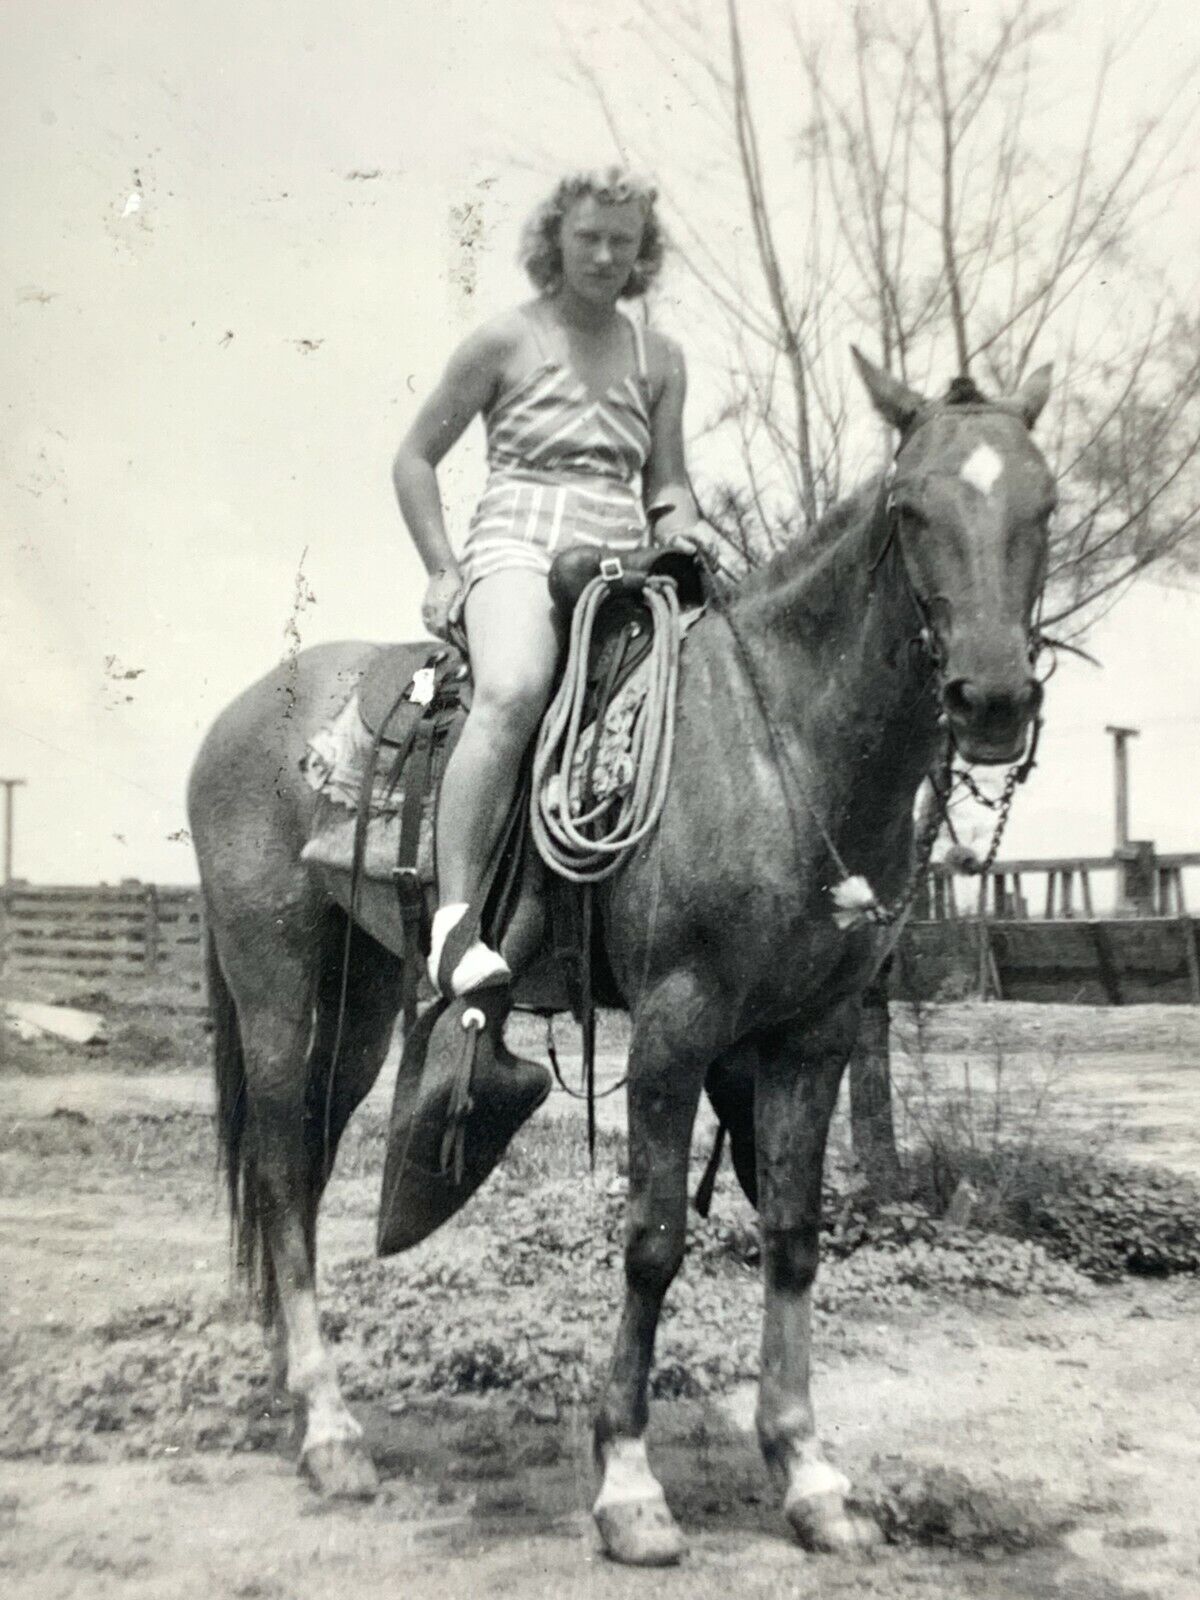 AxG) Found Photograph Beautiful Blonde Woman On Horse 1930's-40's Horseback